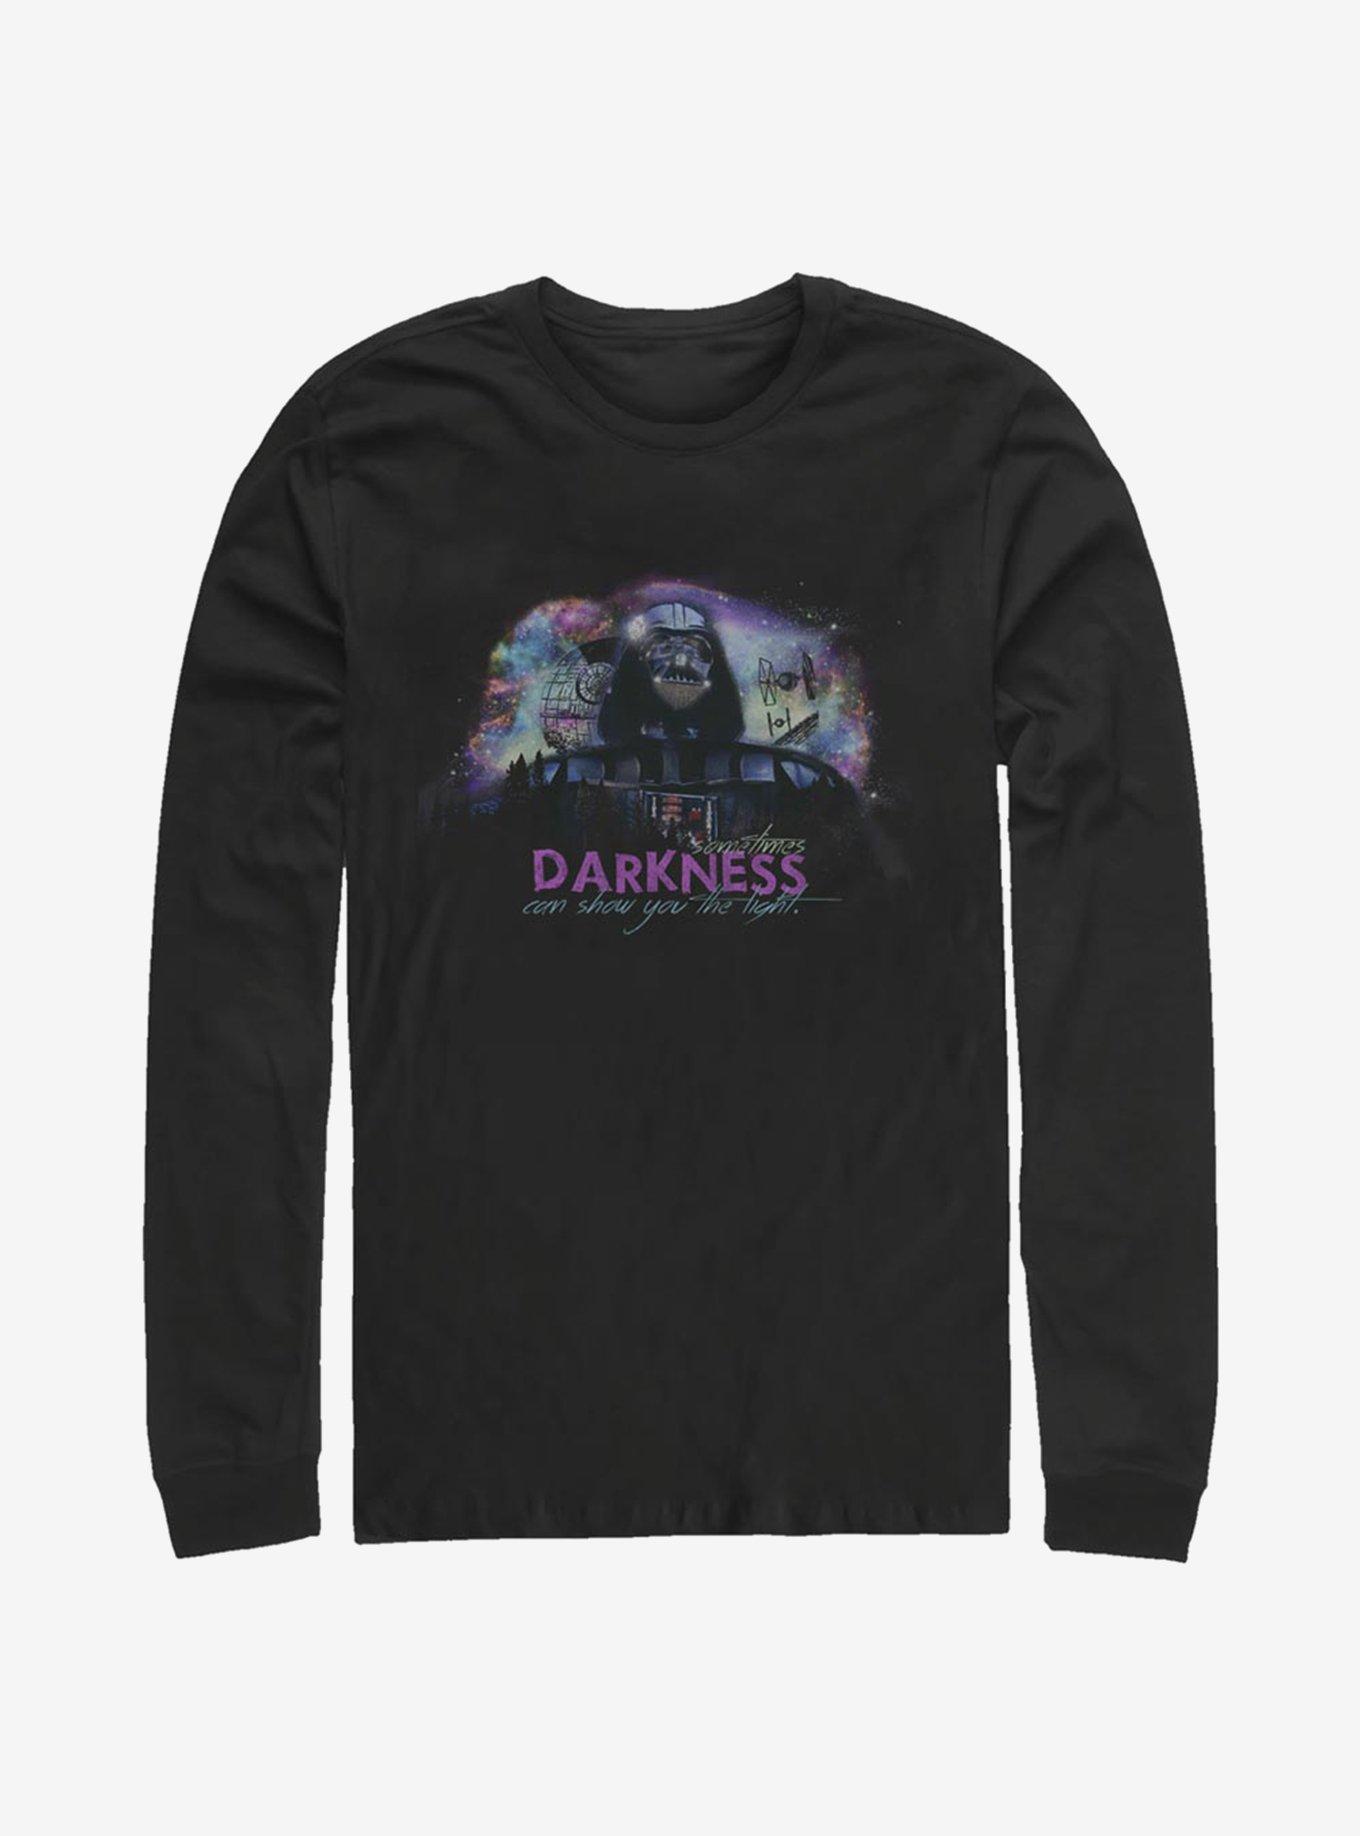 Star Wars Darkness Cosmic Dust Long-Sleeve T-Shirt